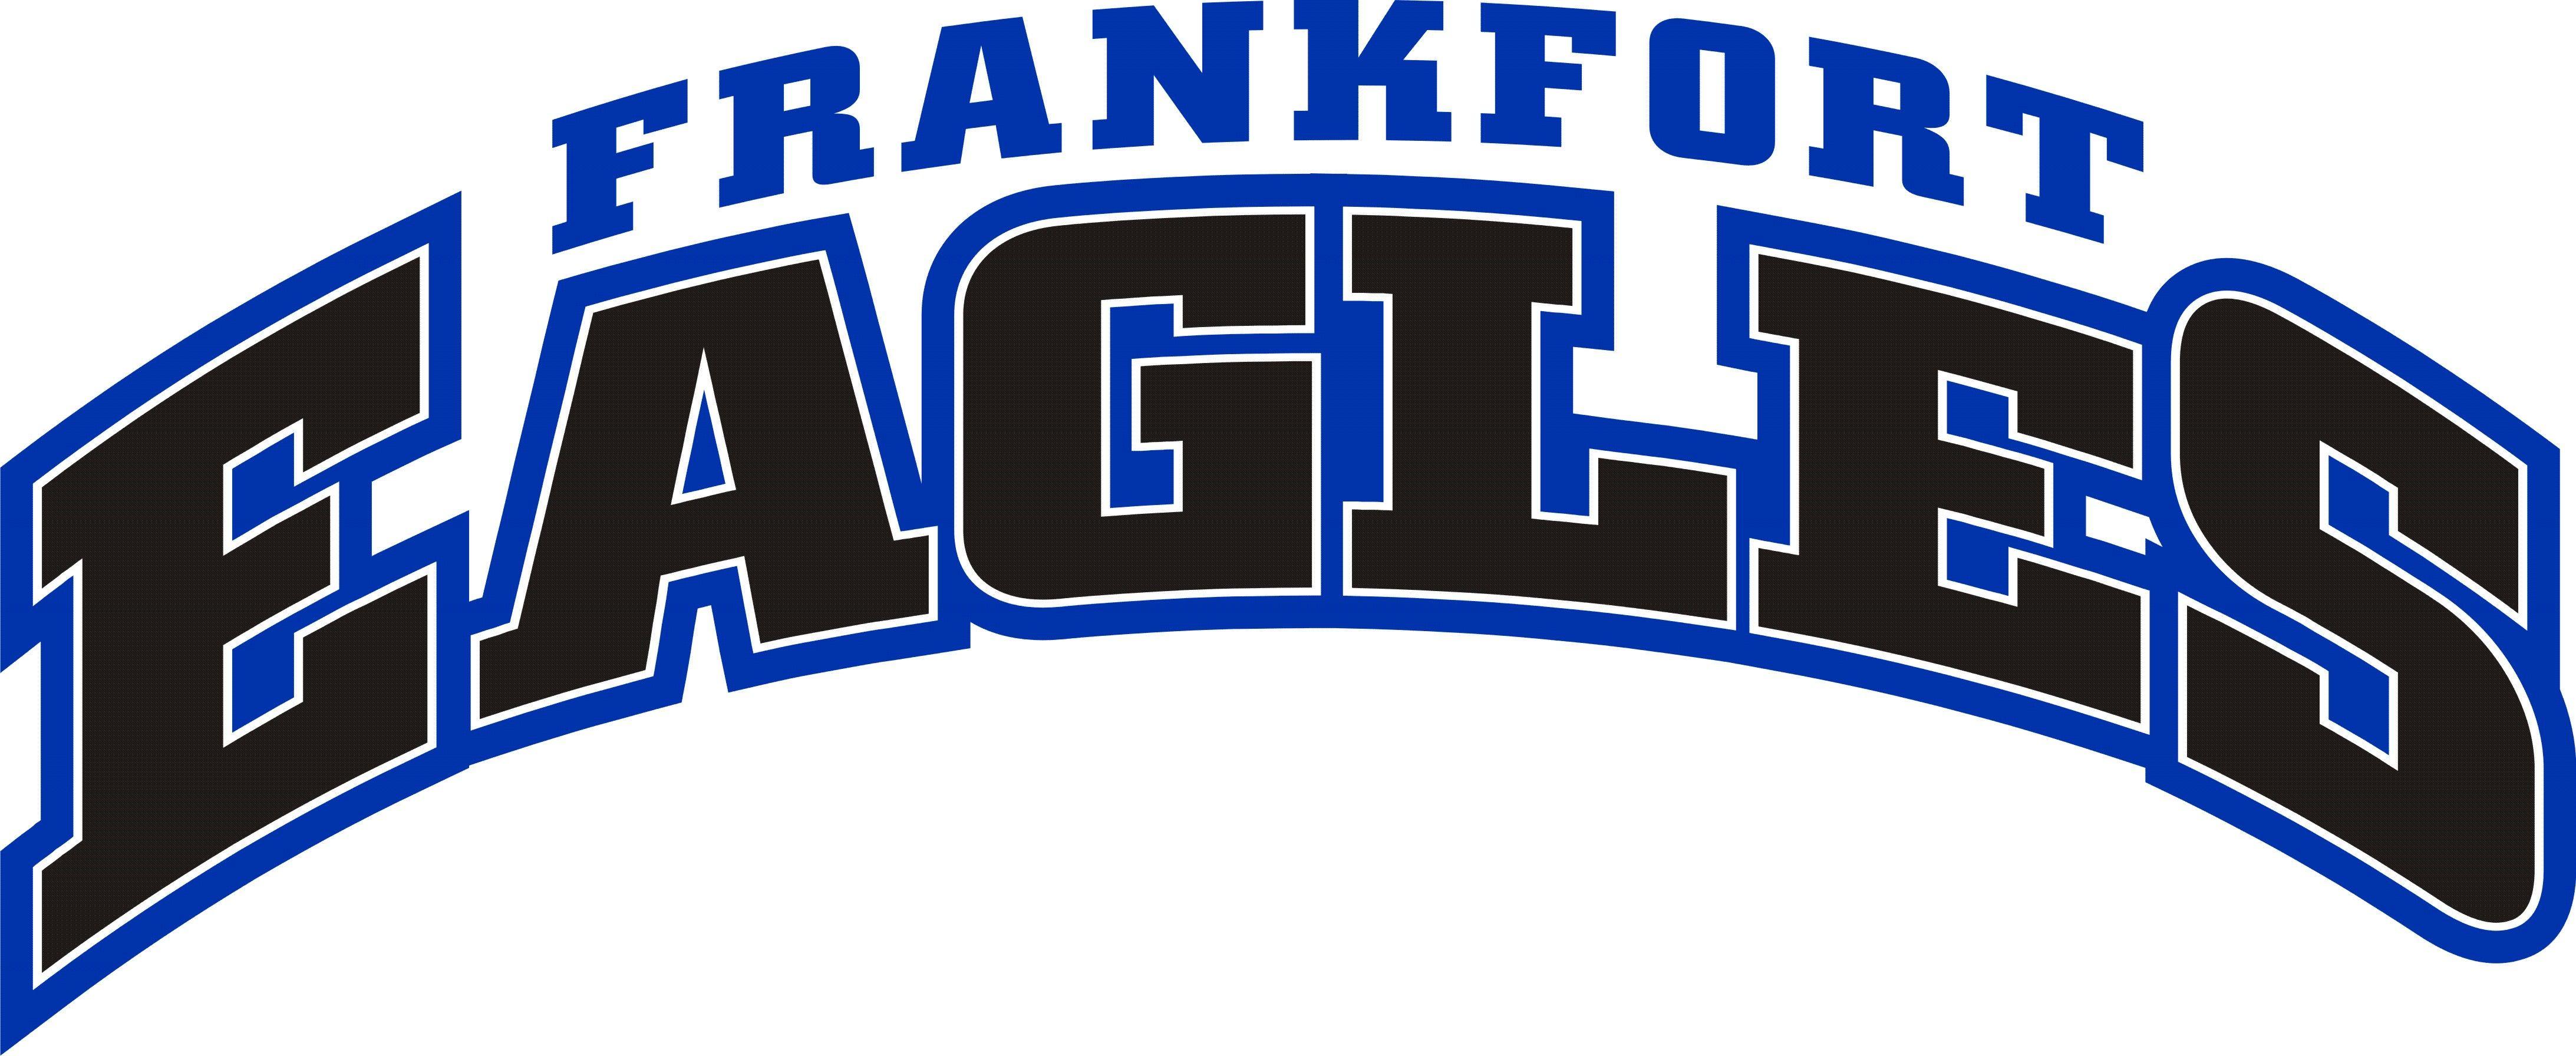 Frankfort Logo - Documents. Frankfort Boys Baseball Inc